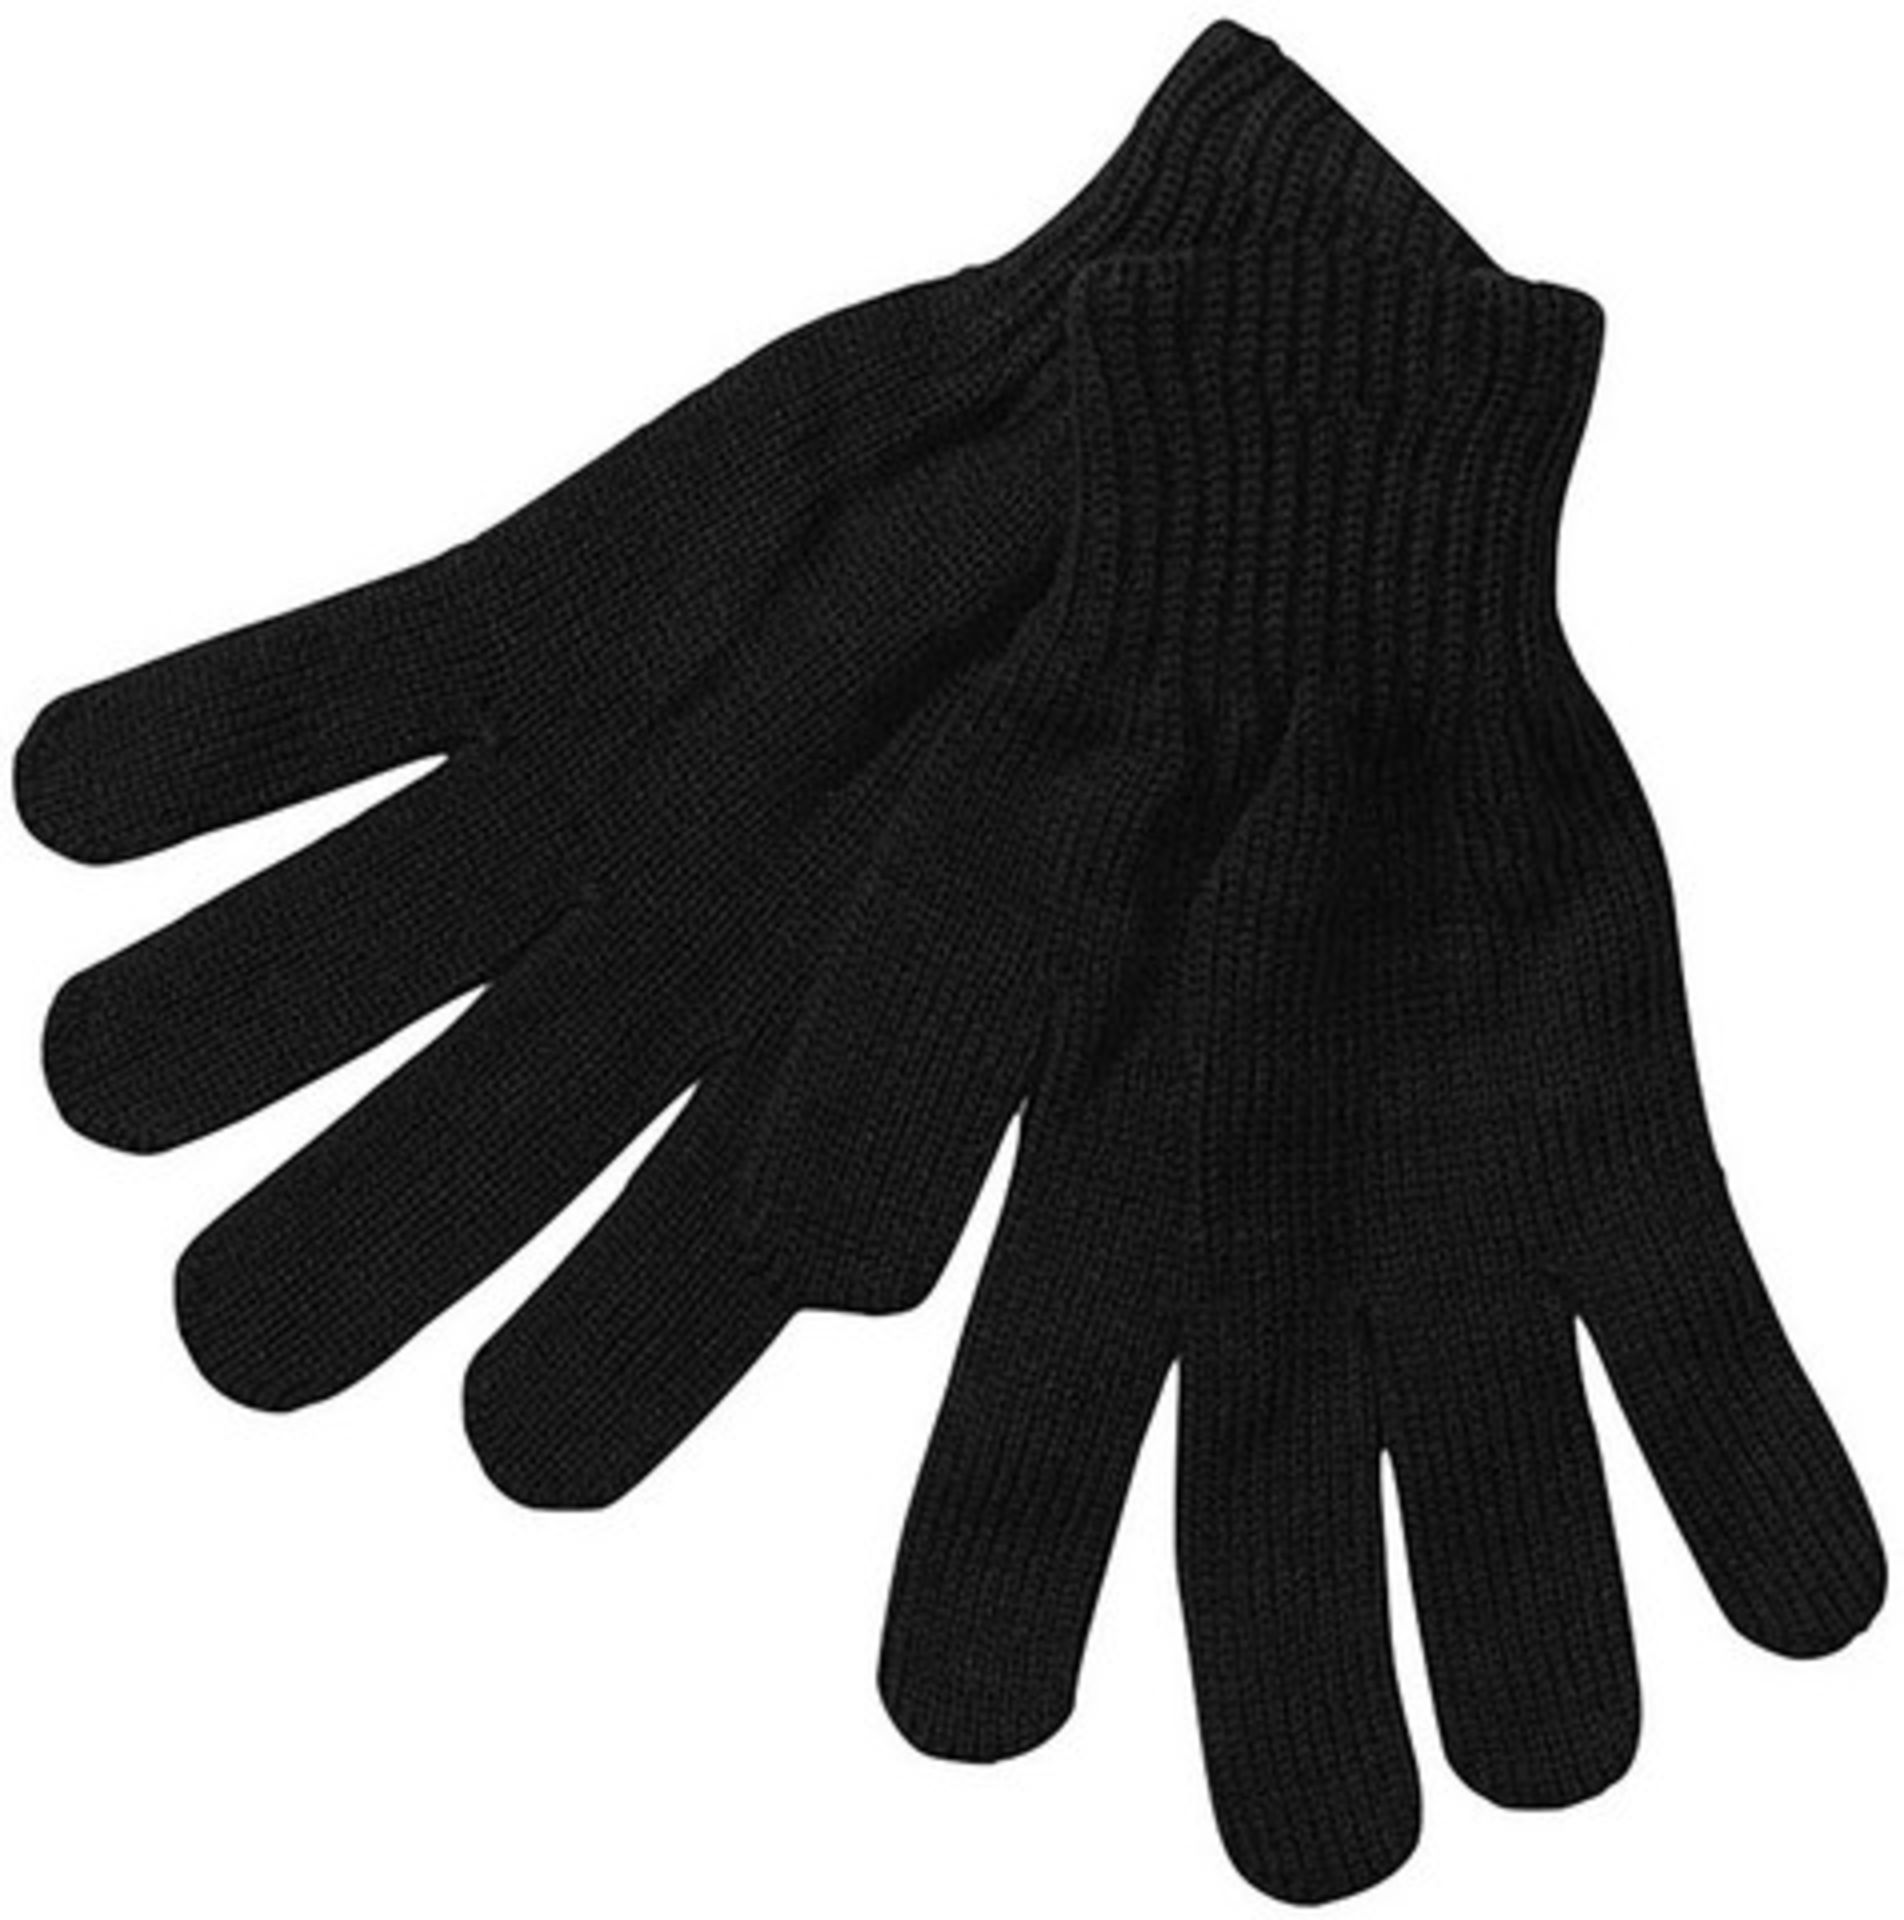 V Brand New Job Lot of Twelve Pairs Mens Black Thermal Lined Winter Gloves RRP £3.99 Per Pair - Image 2 of 2